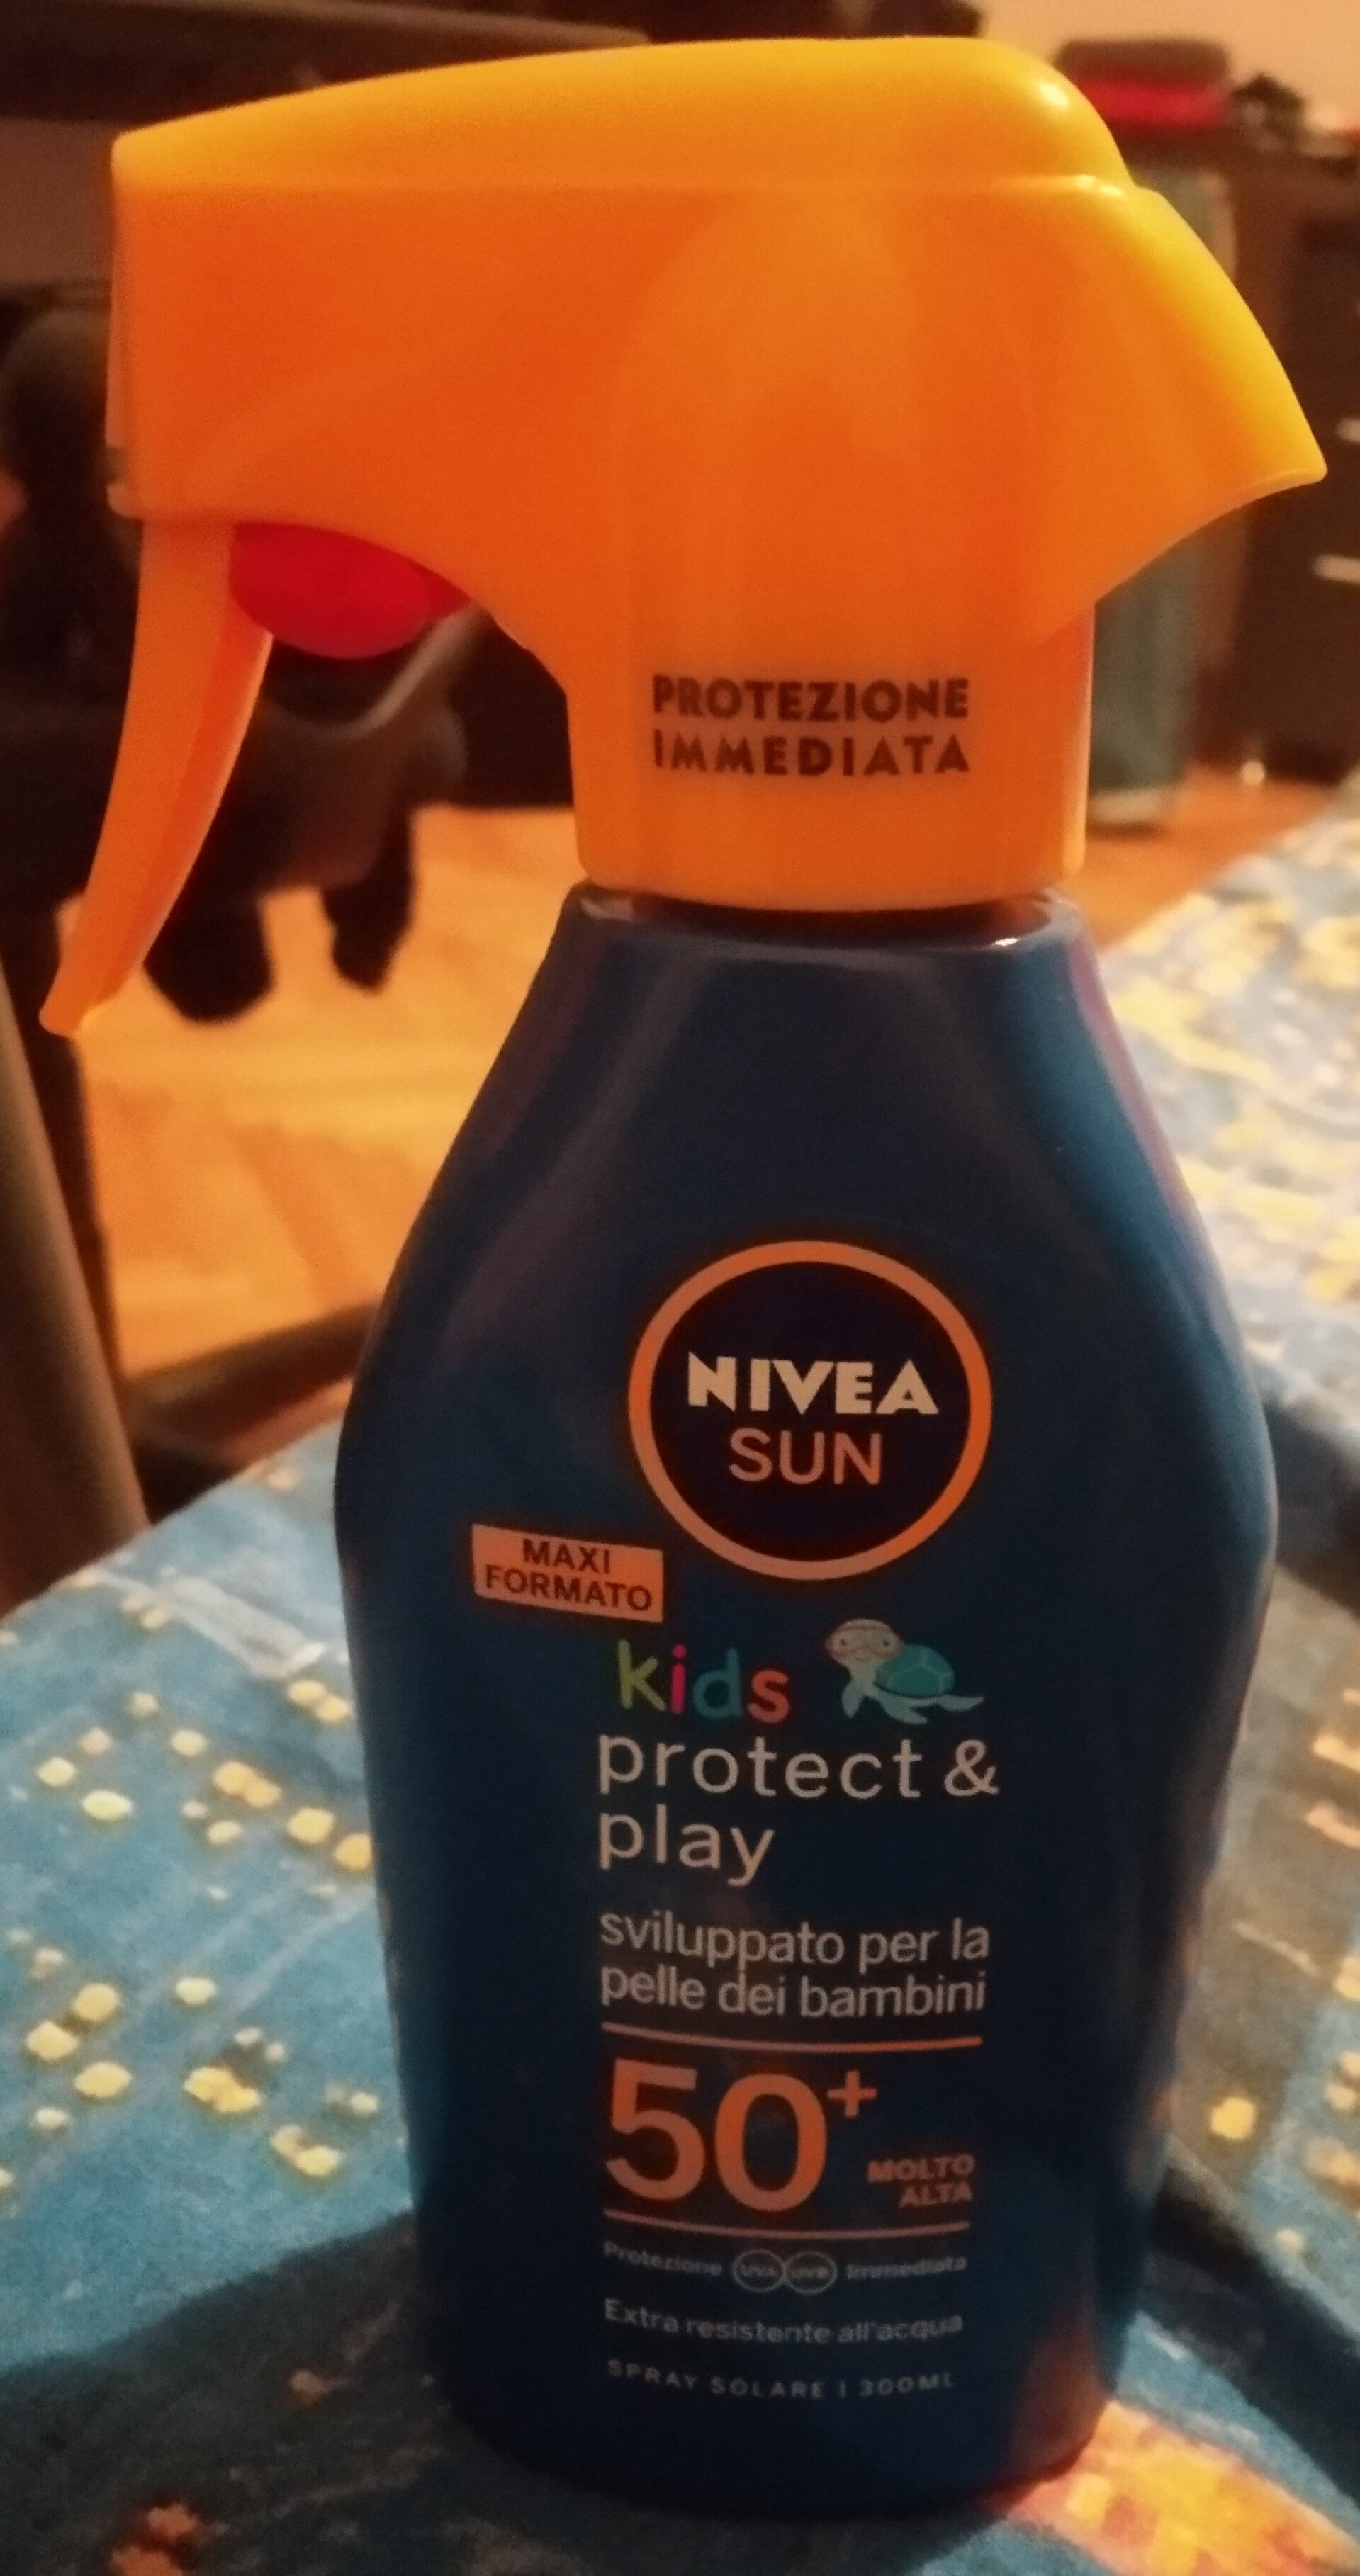 Nivea sun kids protect & play 50+ - Produkt - it